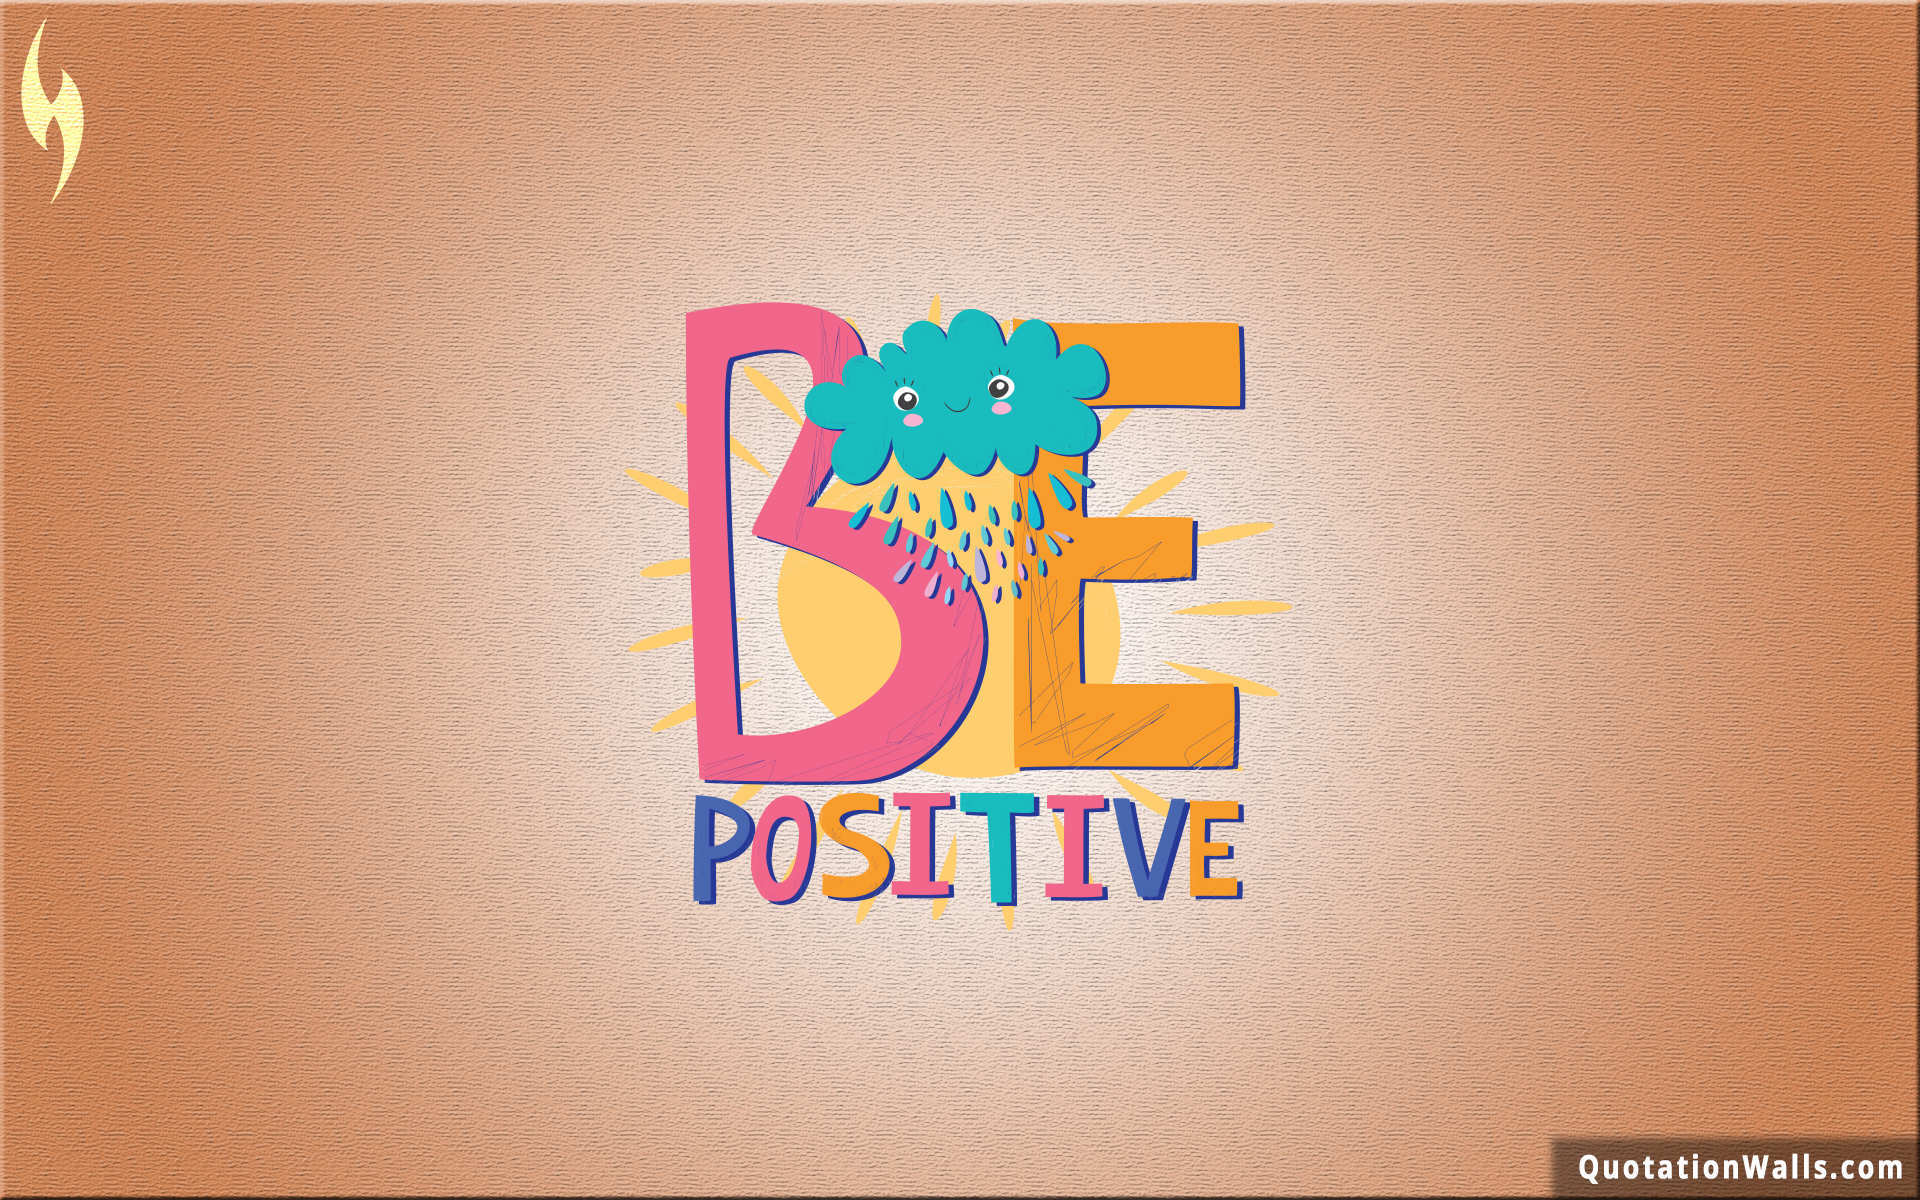 Think Positive HD Wallpaper by SamuelsGraphics on DeviantArt